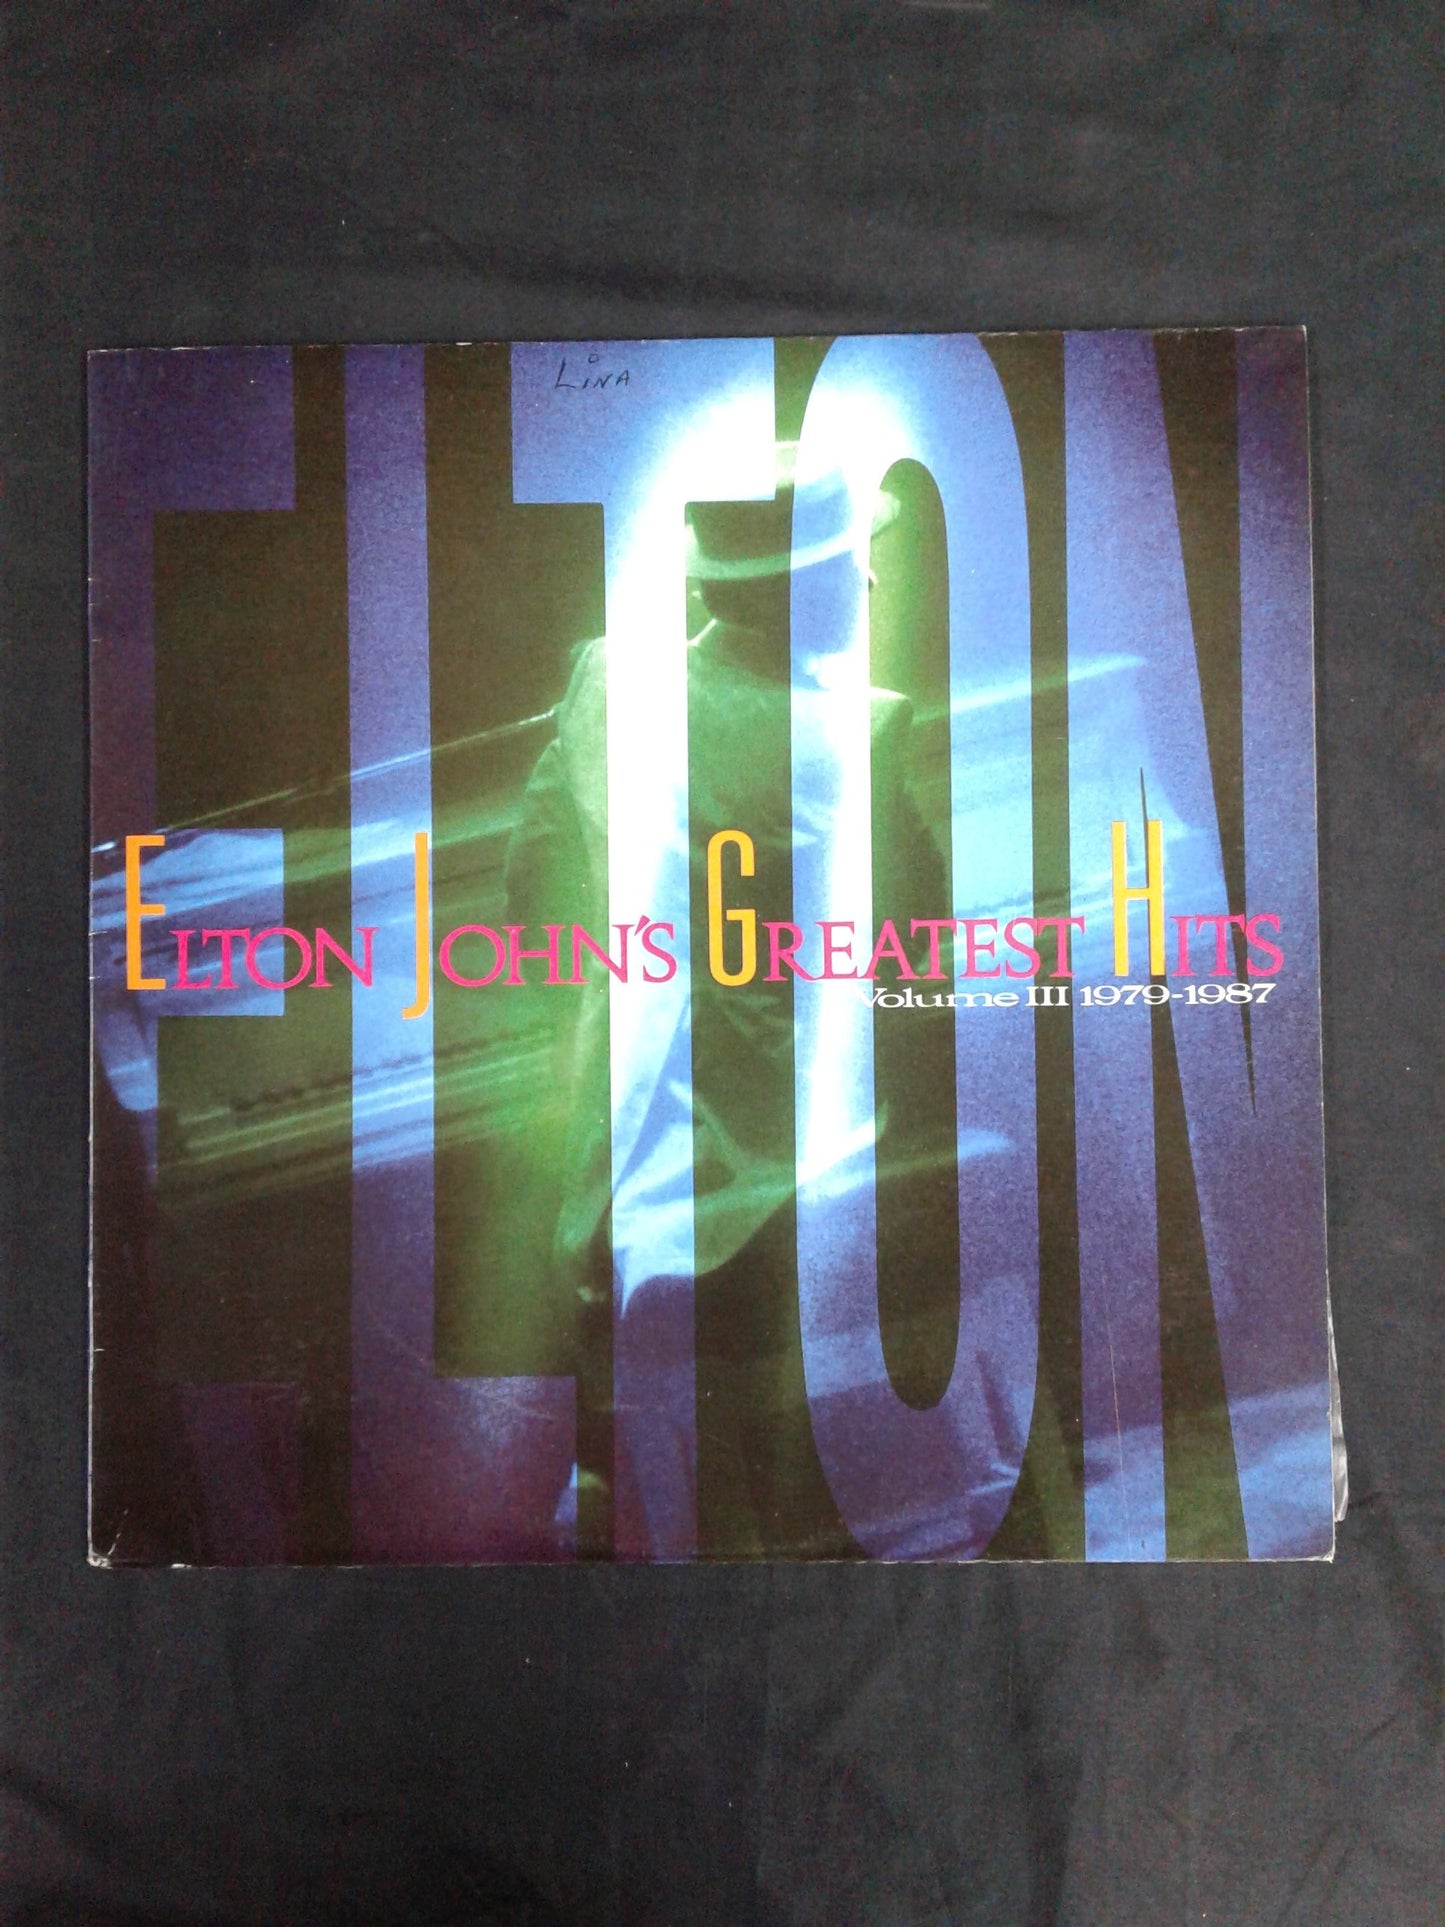 Vinyle Elton John's Greatest hits